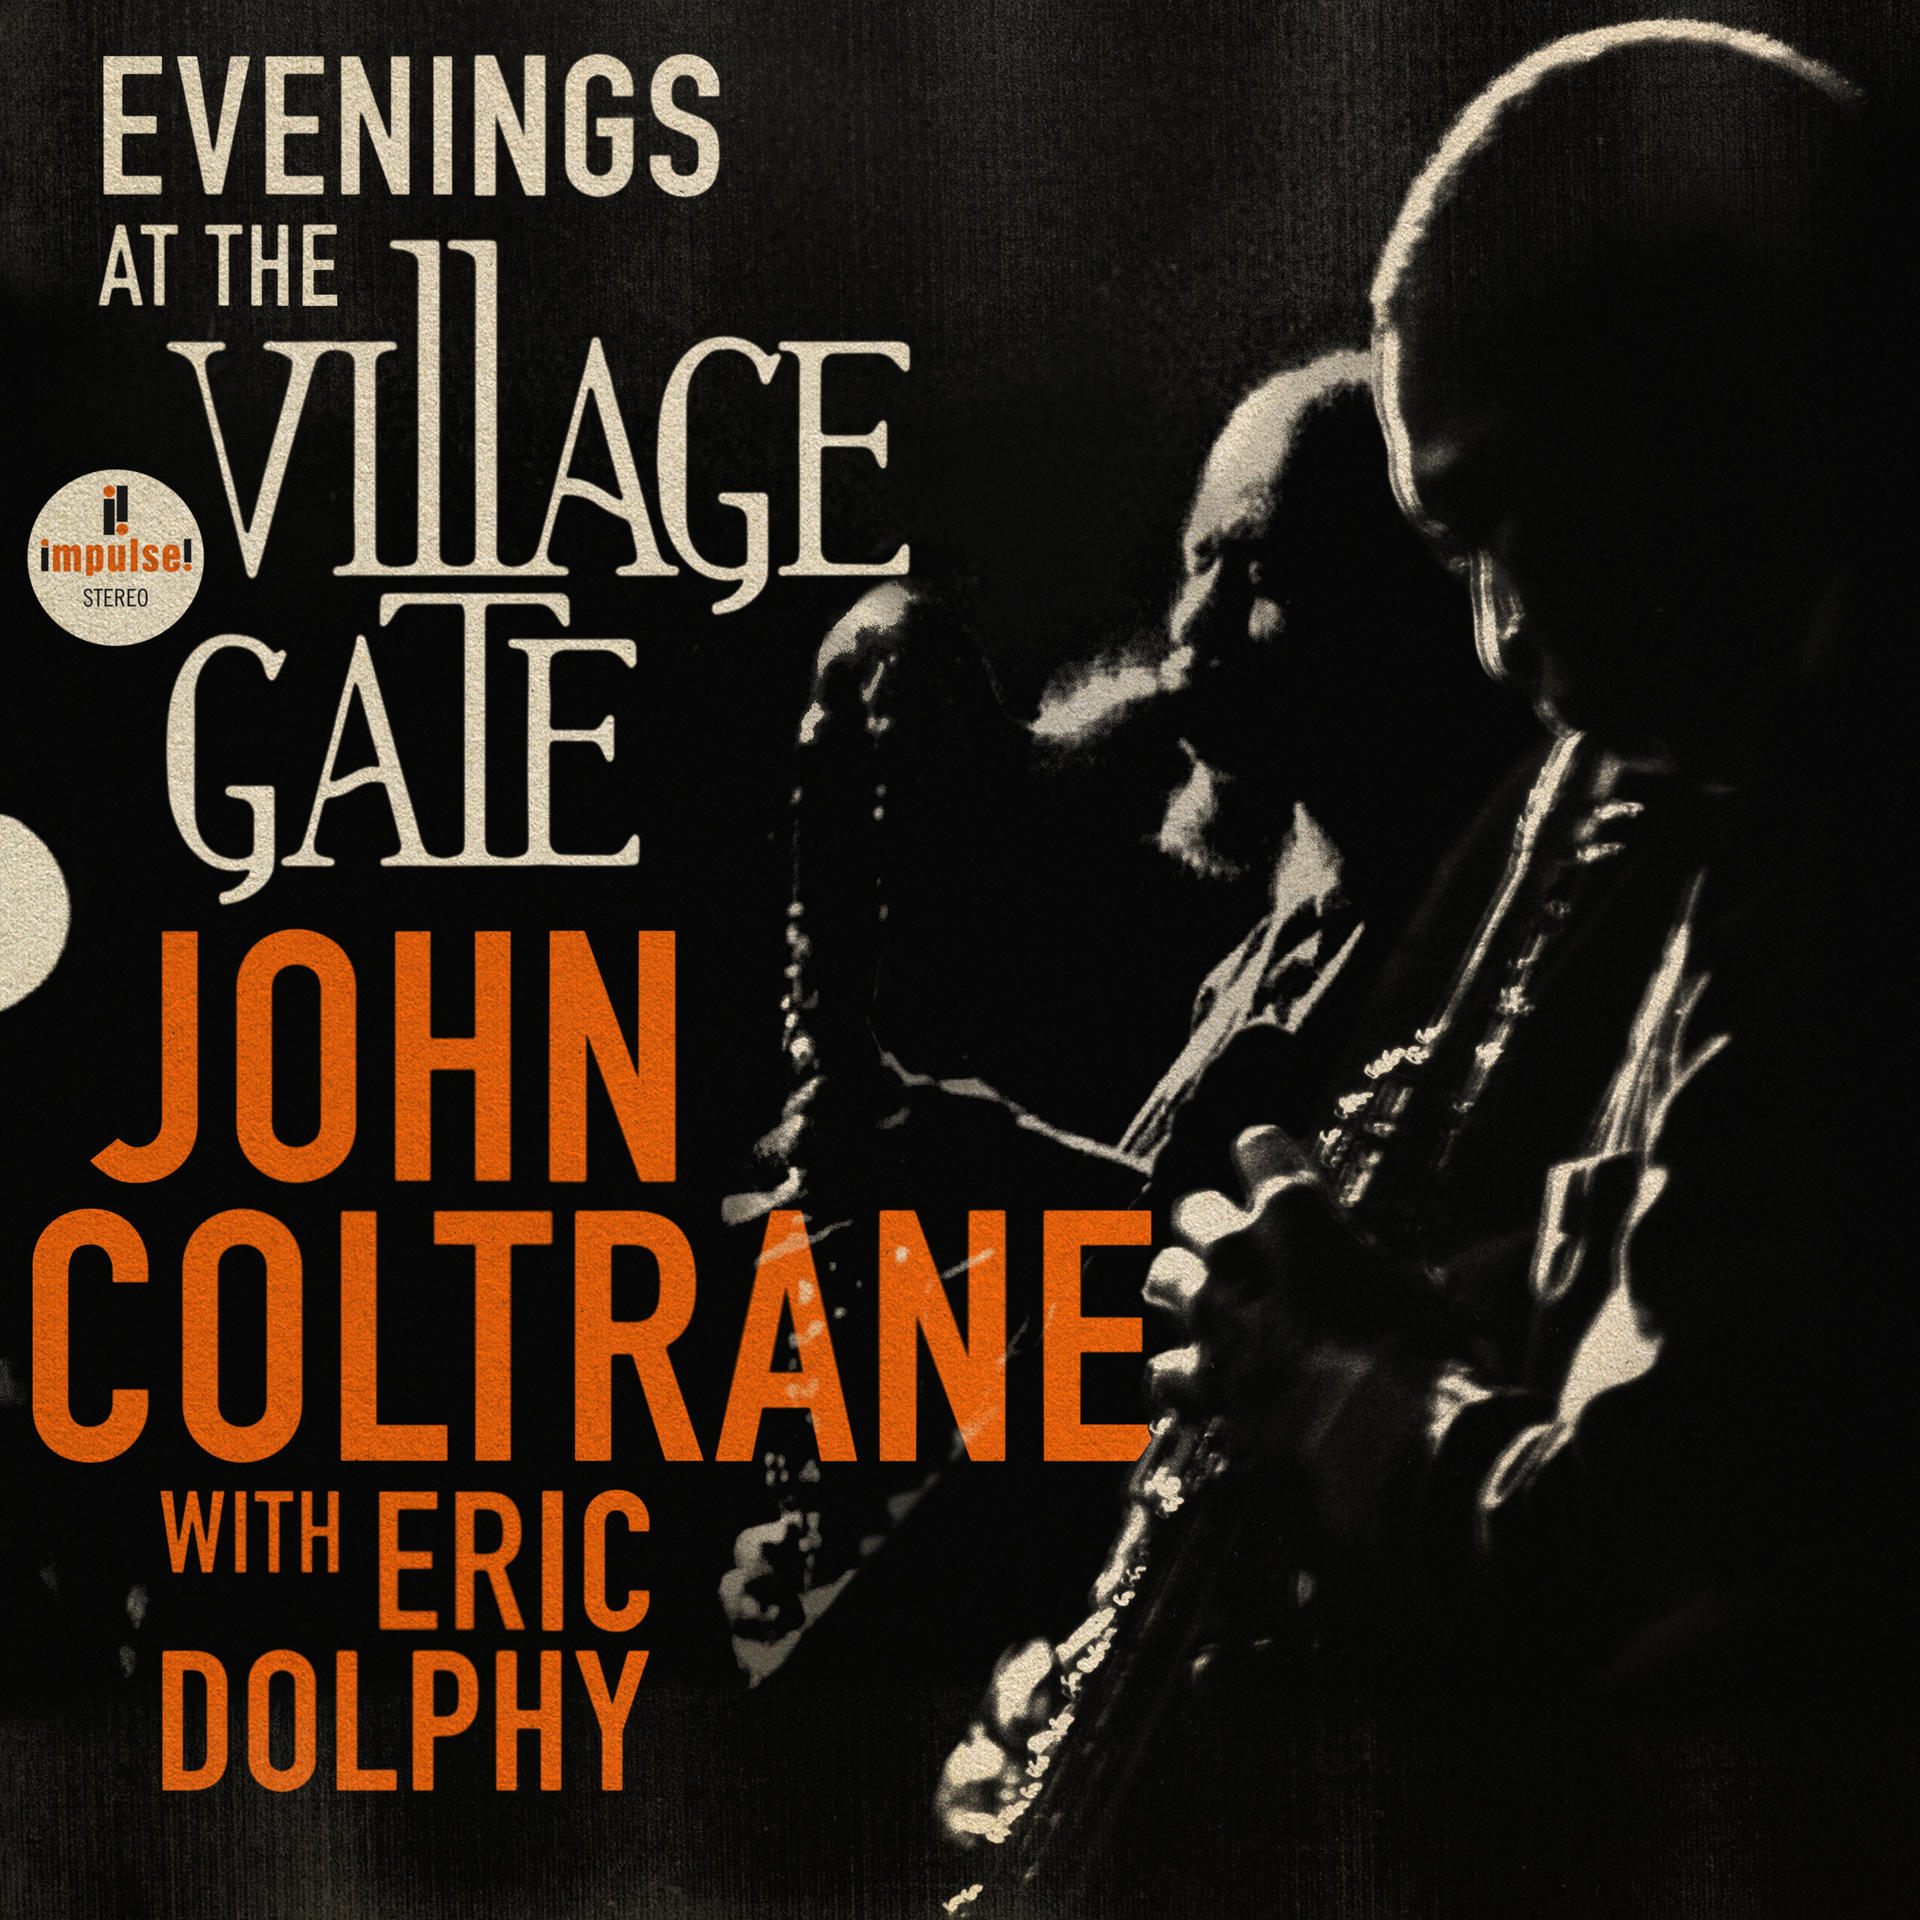 Evenings The Eric (Vinyl) John - - Gate At Dolphy Coltrane, Village